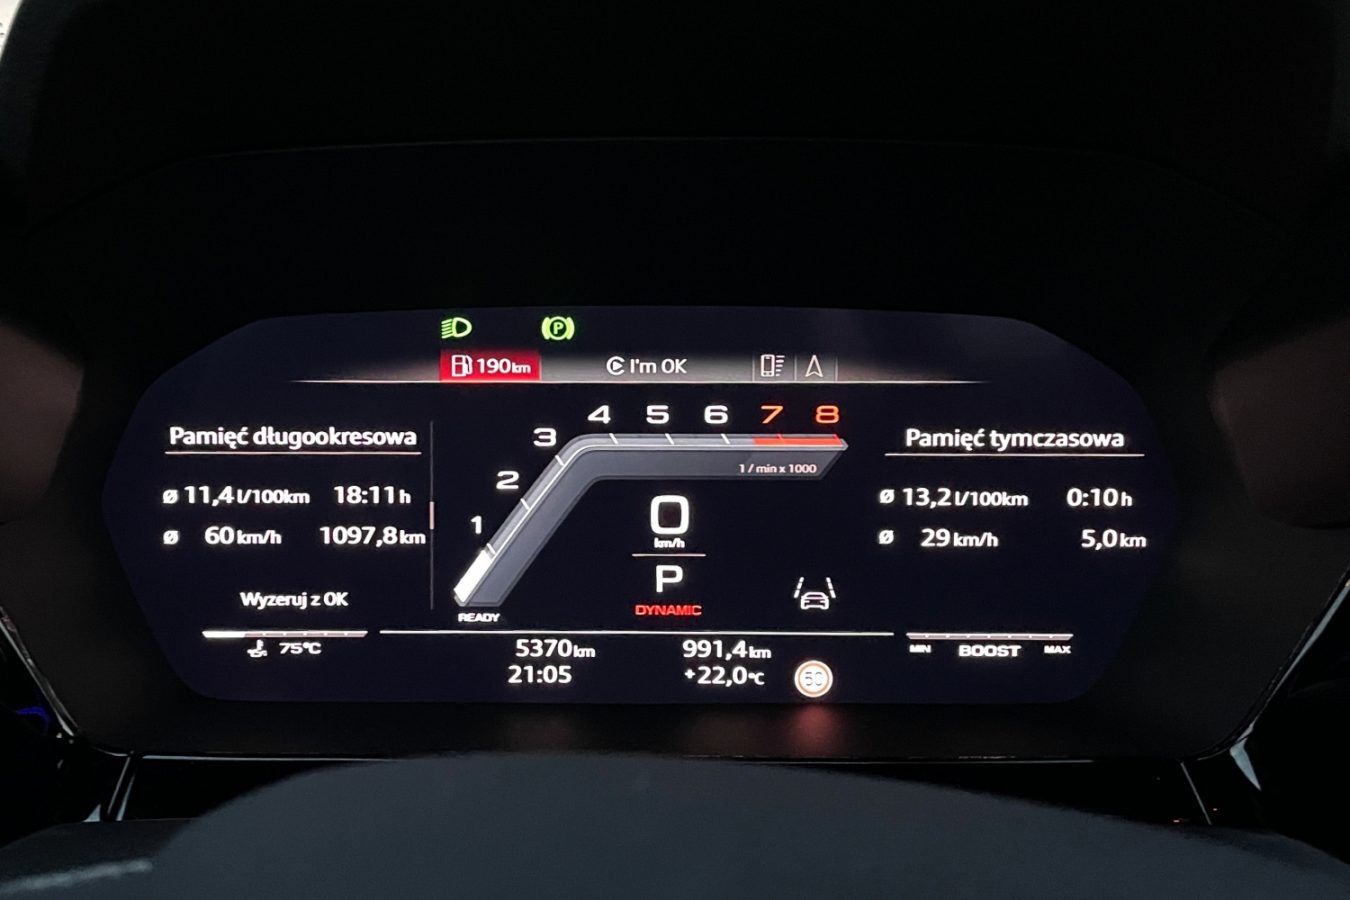 Audi S3 test